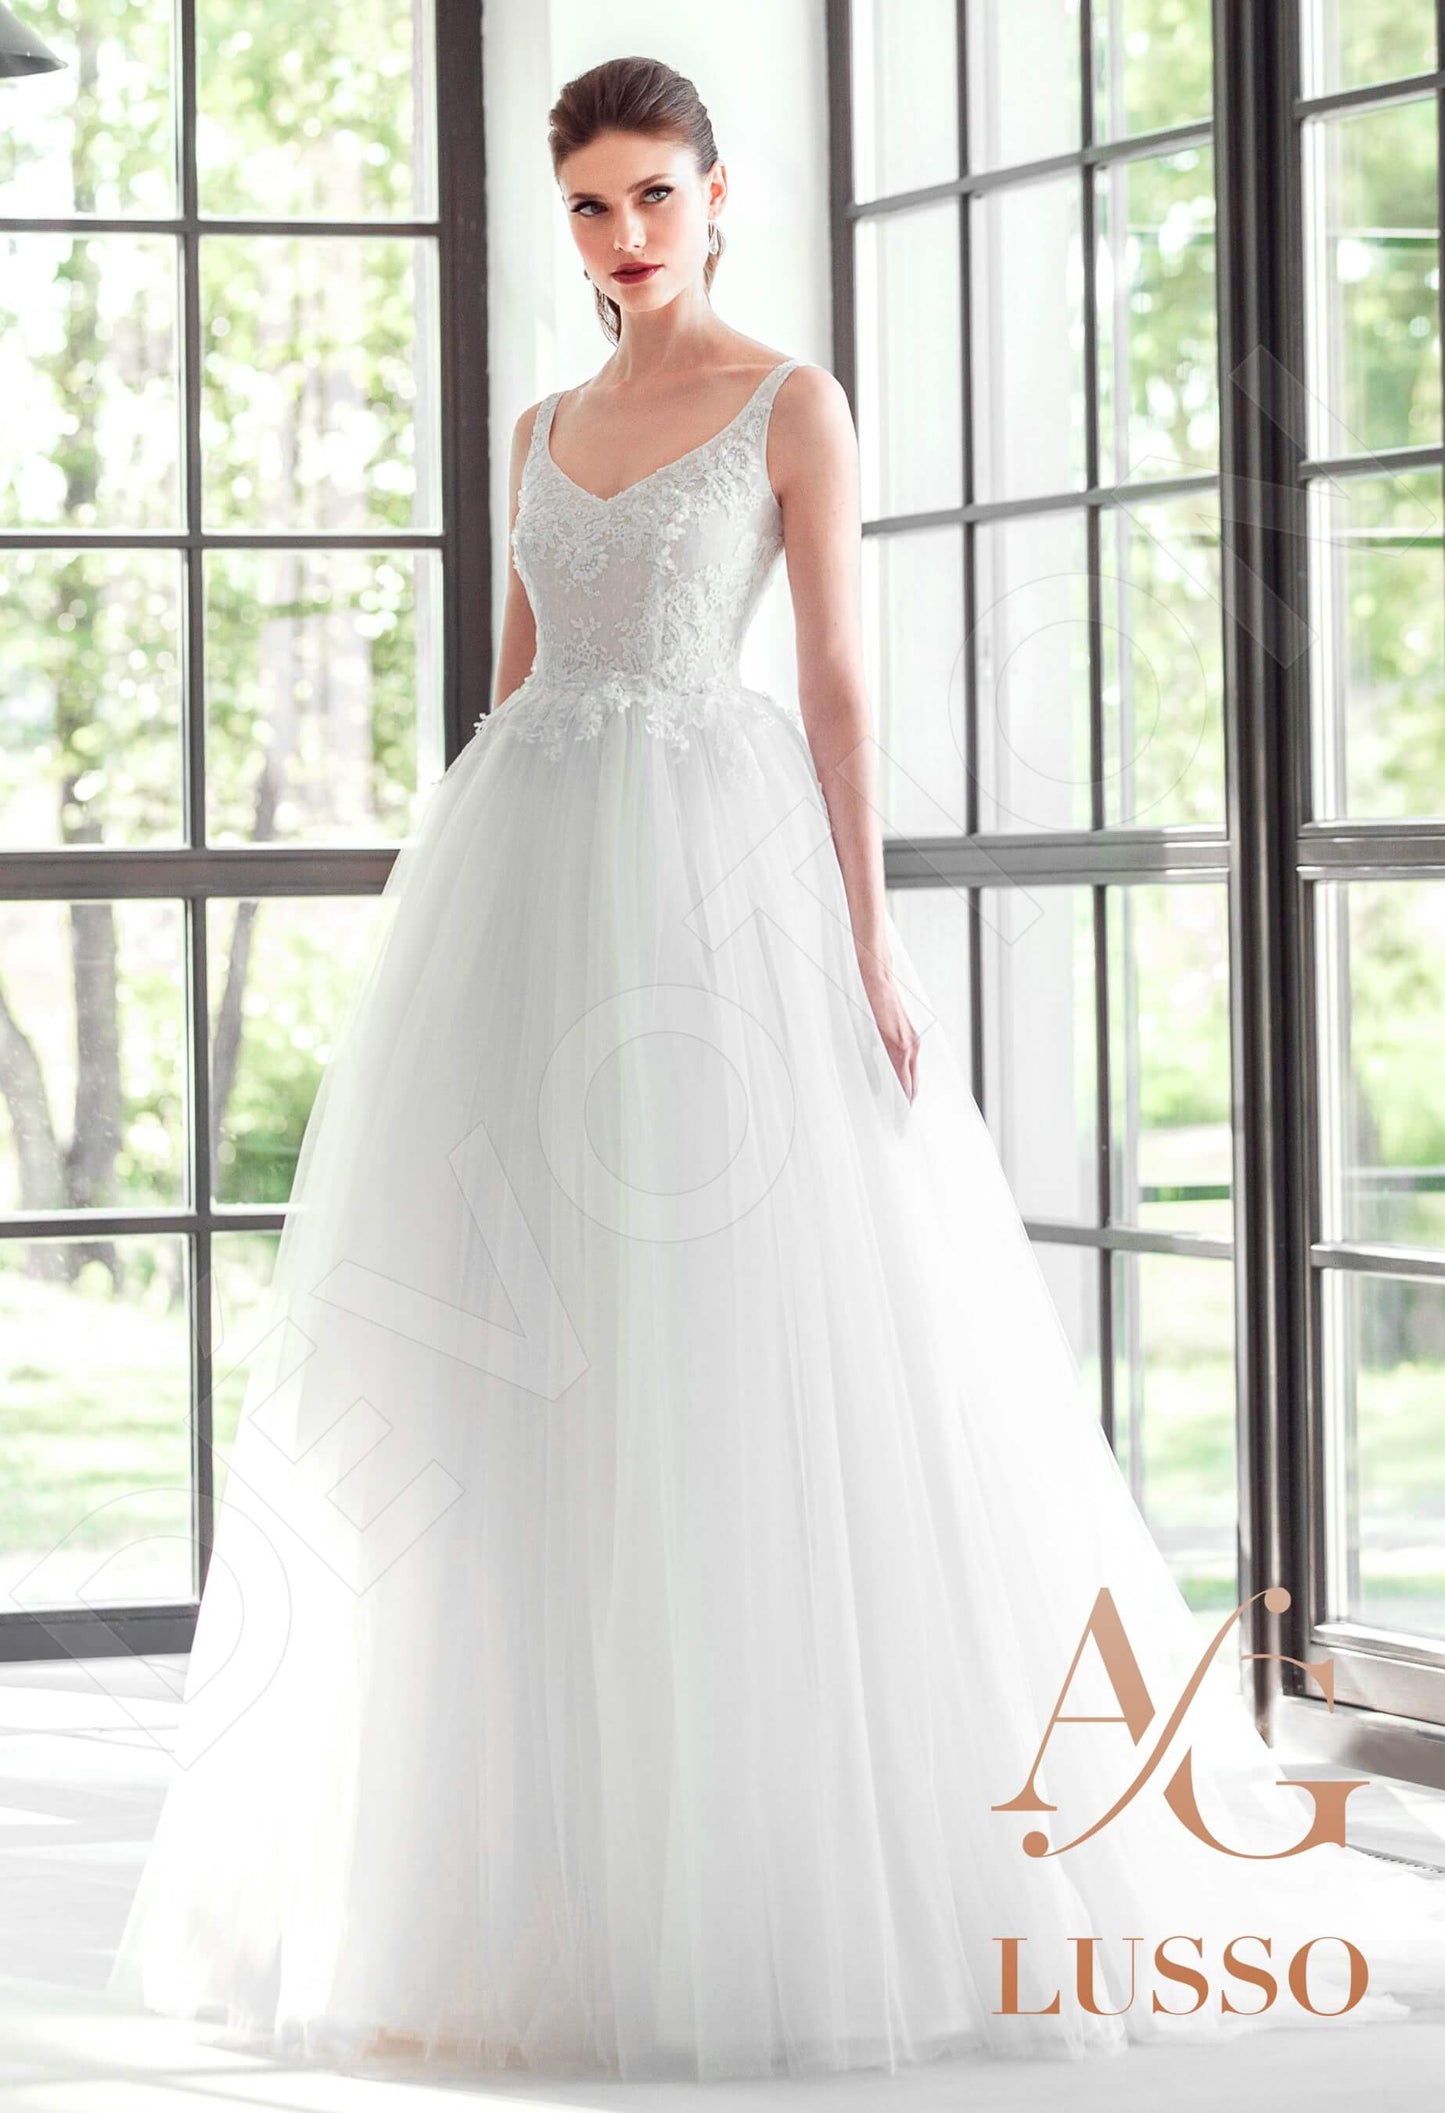 Soula Open back Princess/Ball Gown Sleeveless Wedding Dress Front